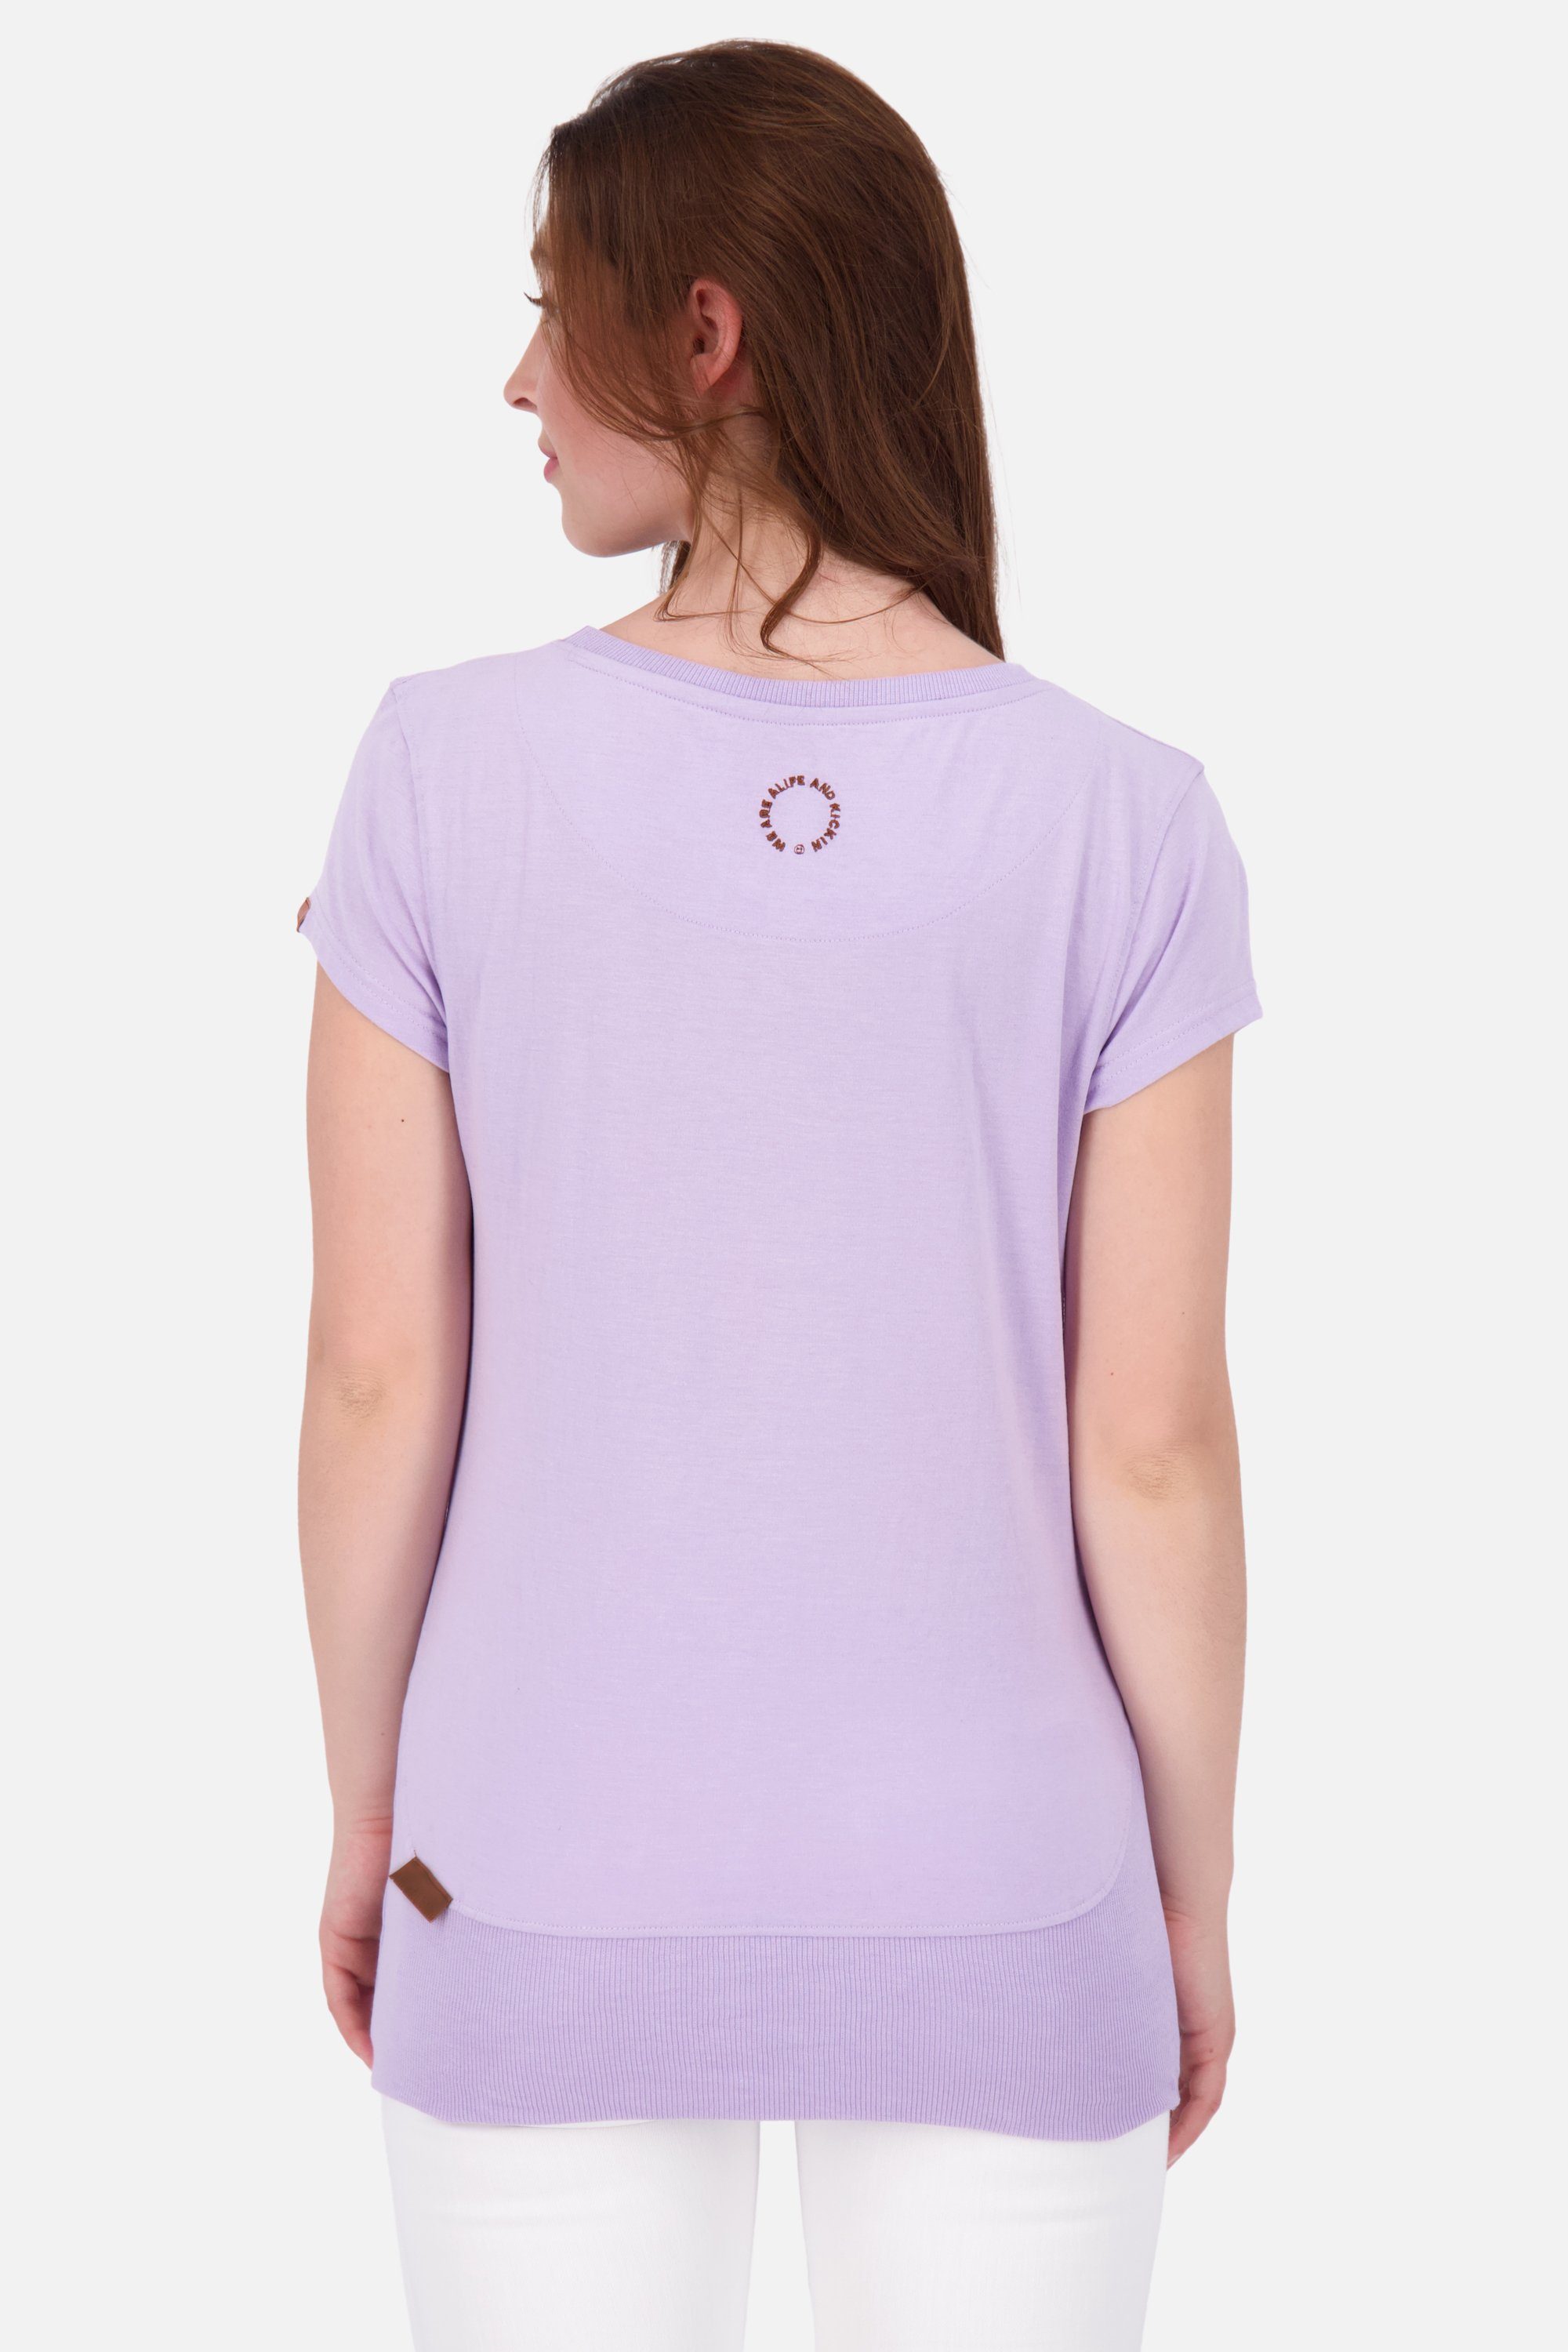 Kickin Shirt digital Rundhalsshirt Alife Kurzarmshirt, Shirt lavender CocoAK Damen A & melange